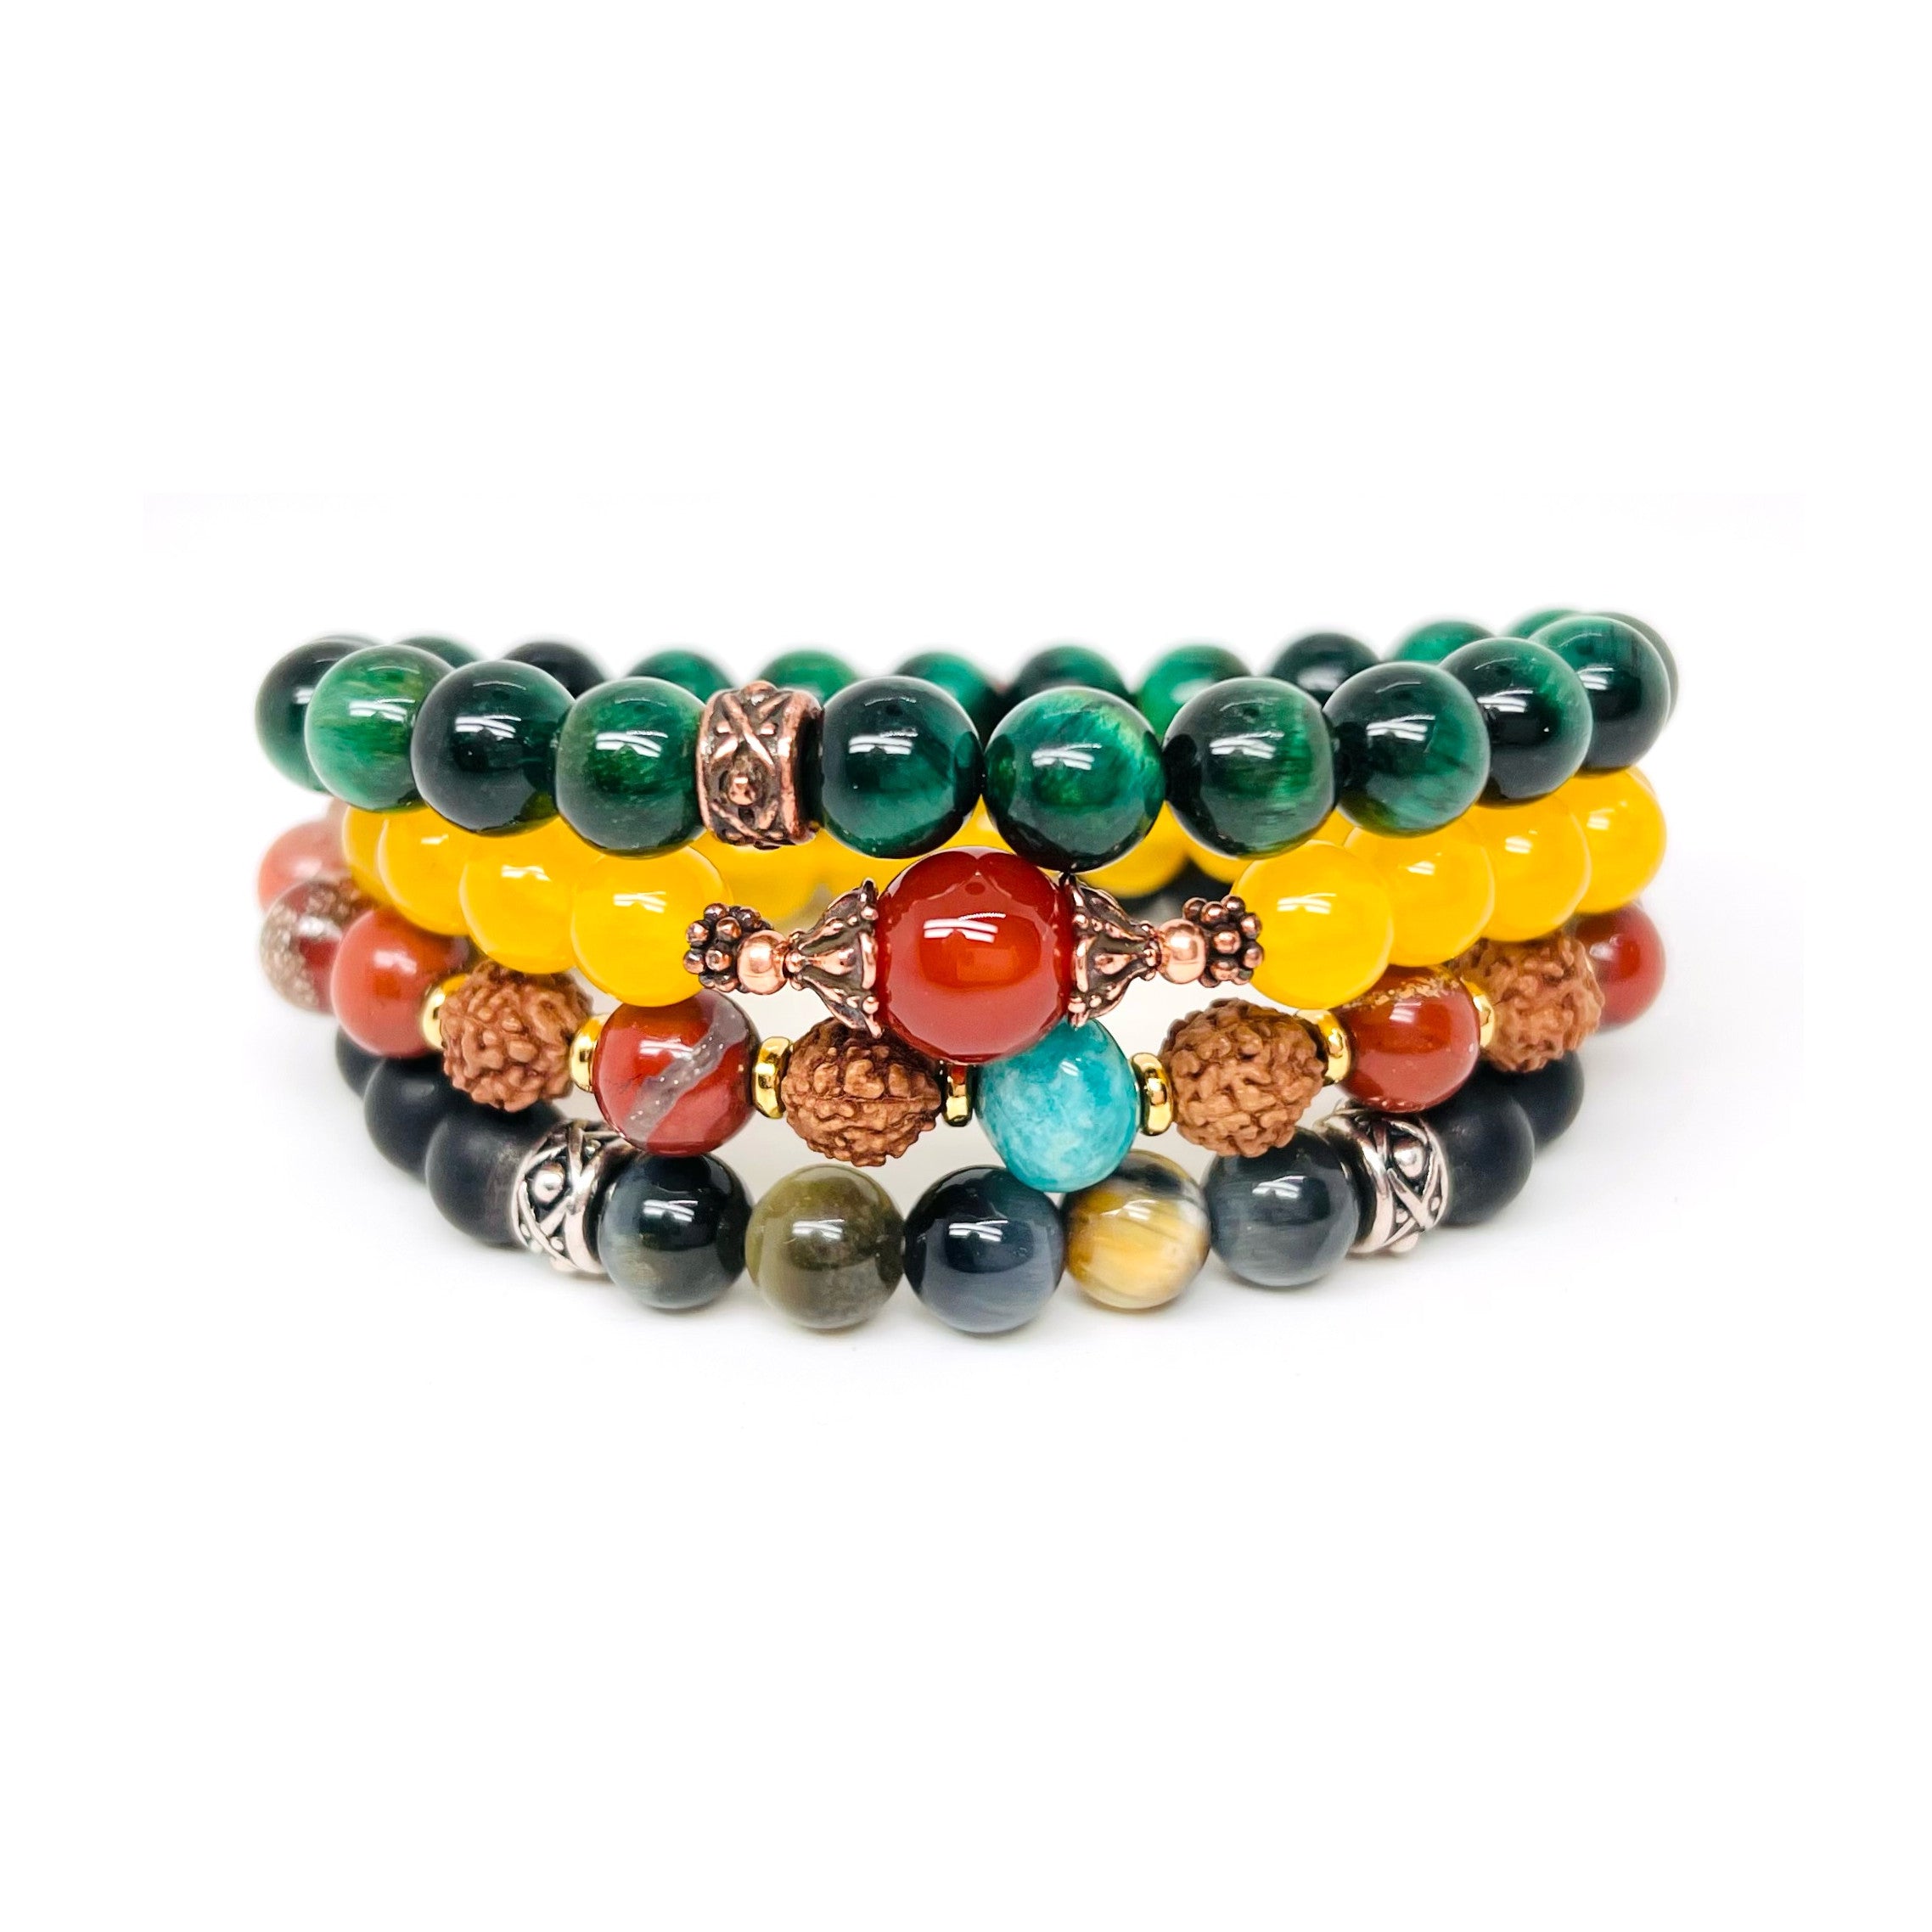 Energy gemstone bracelet collection